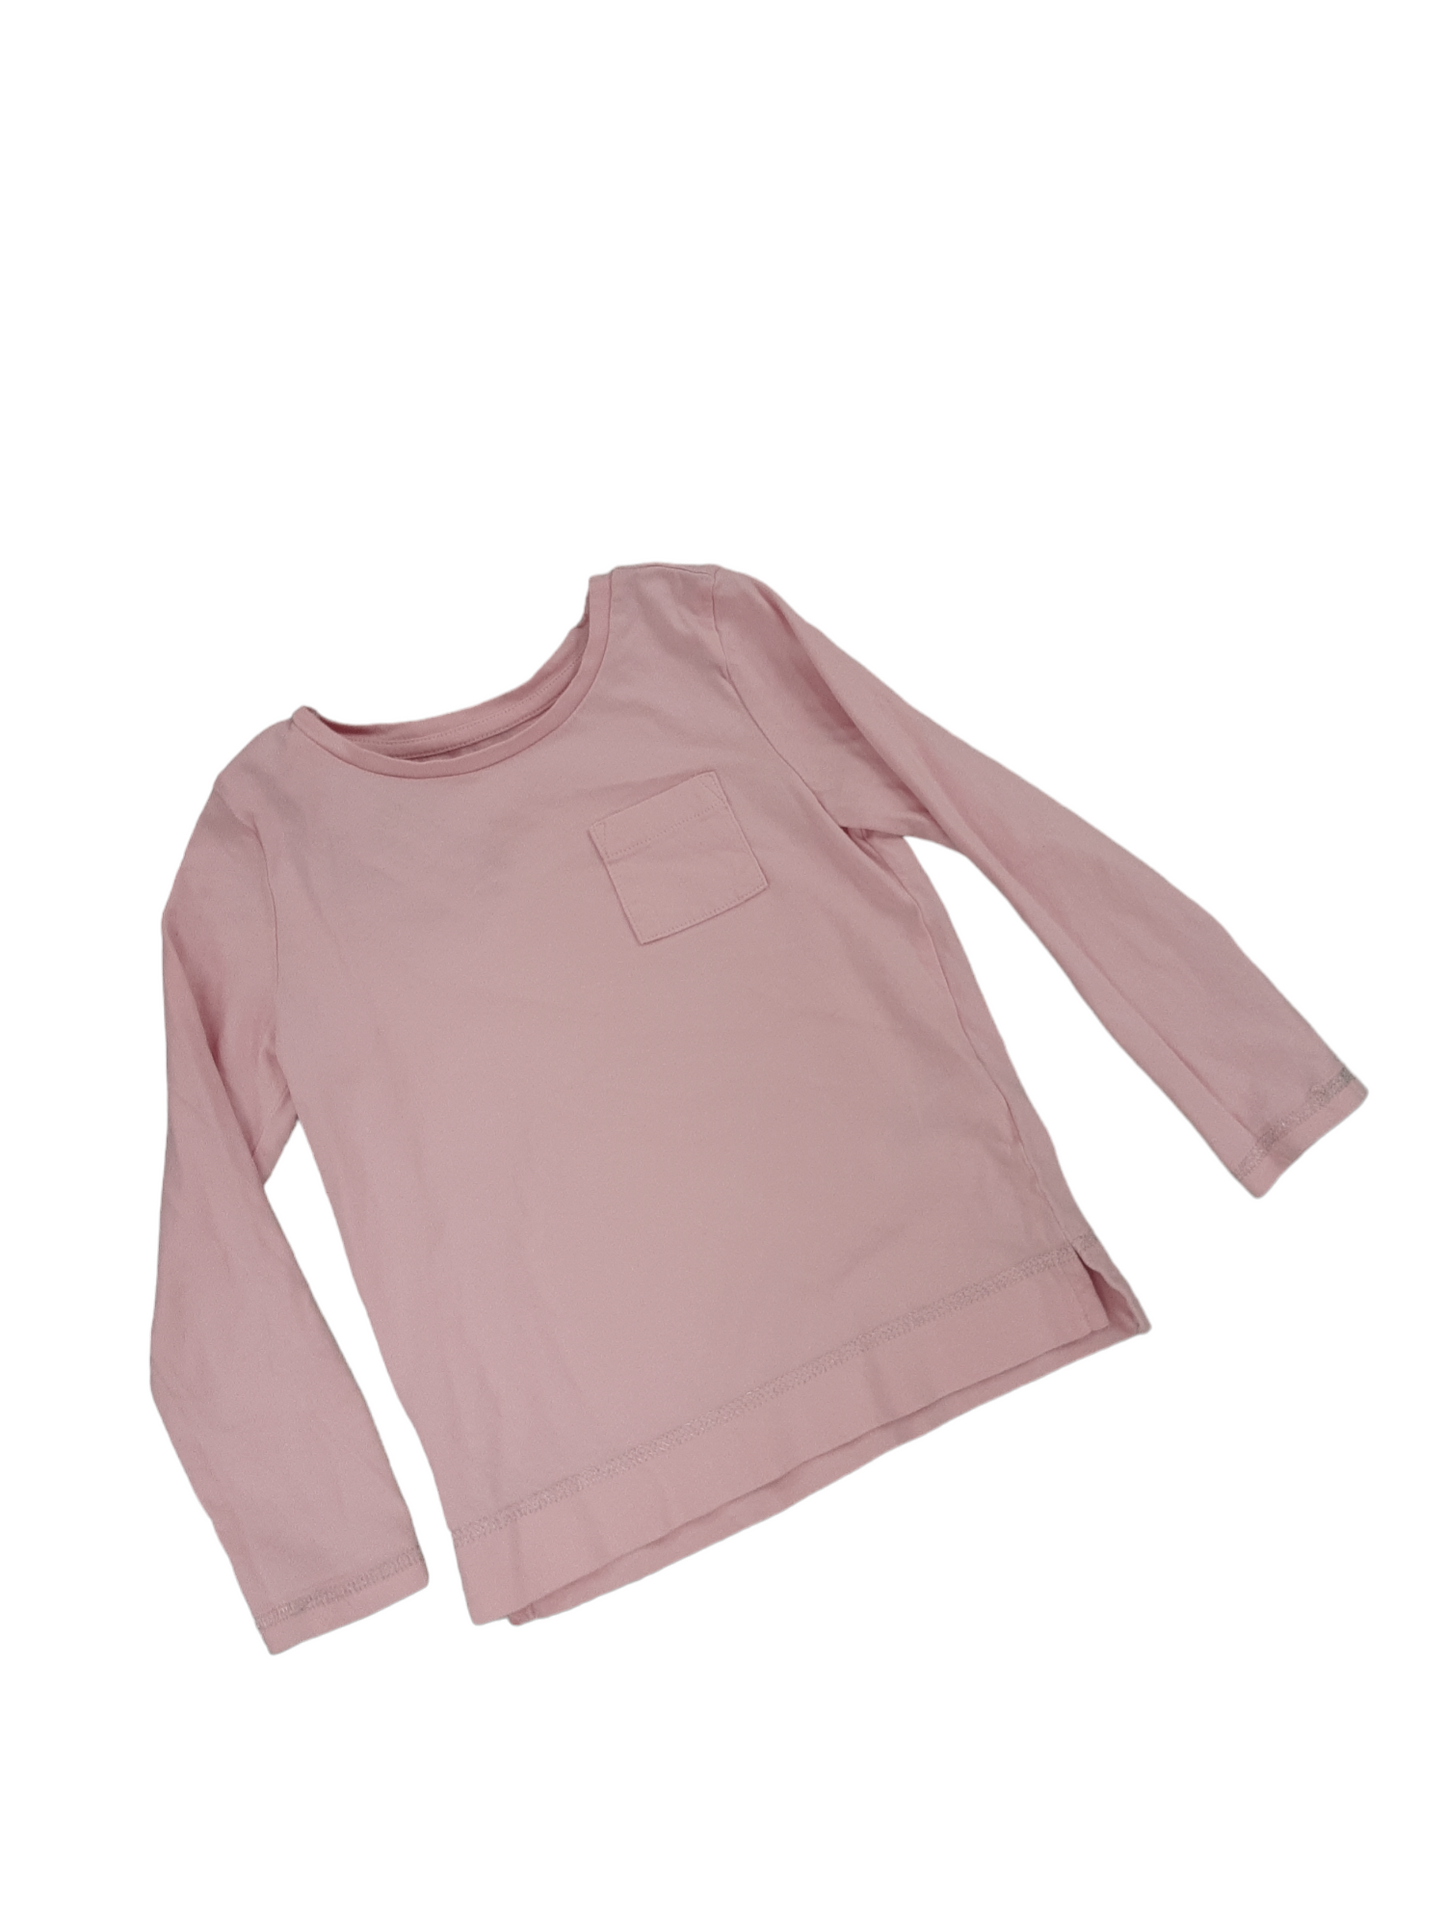 Hot pink shirt size 4t